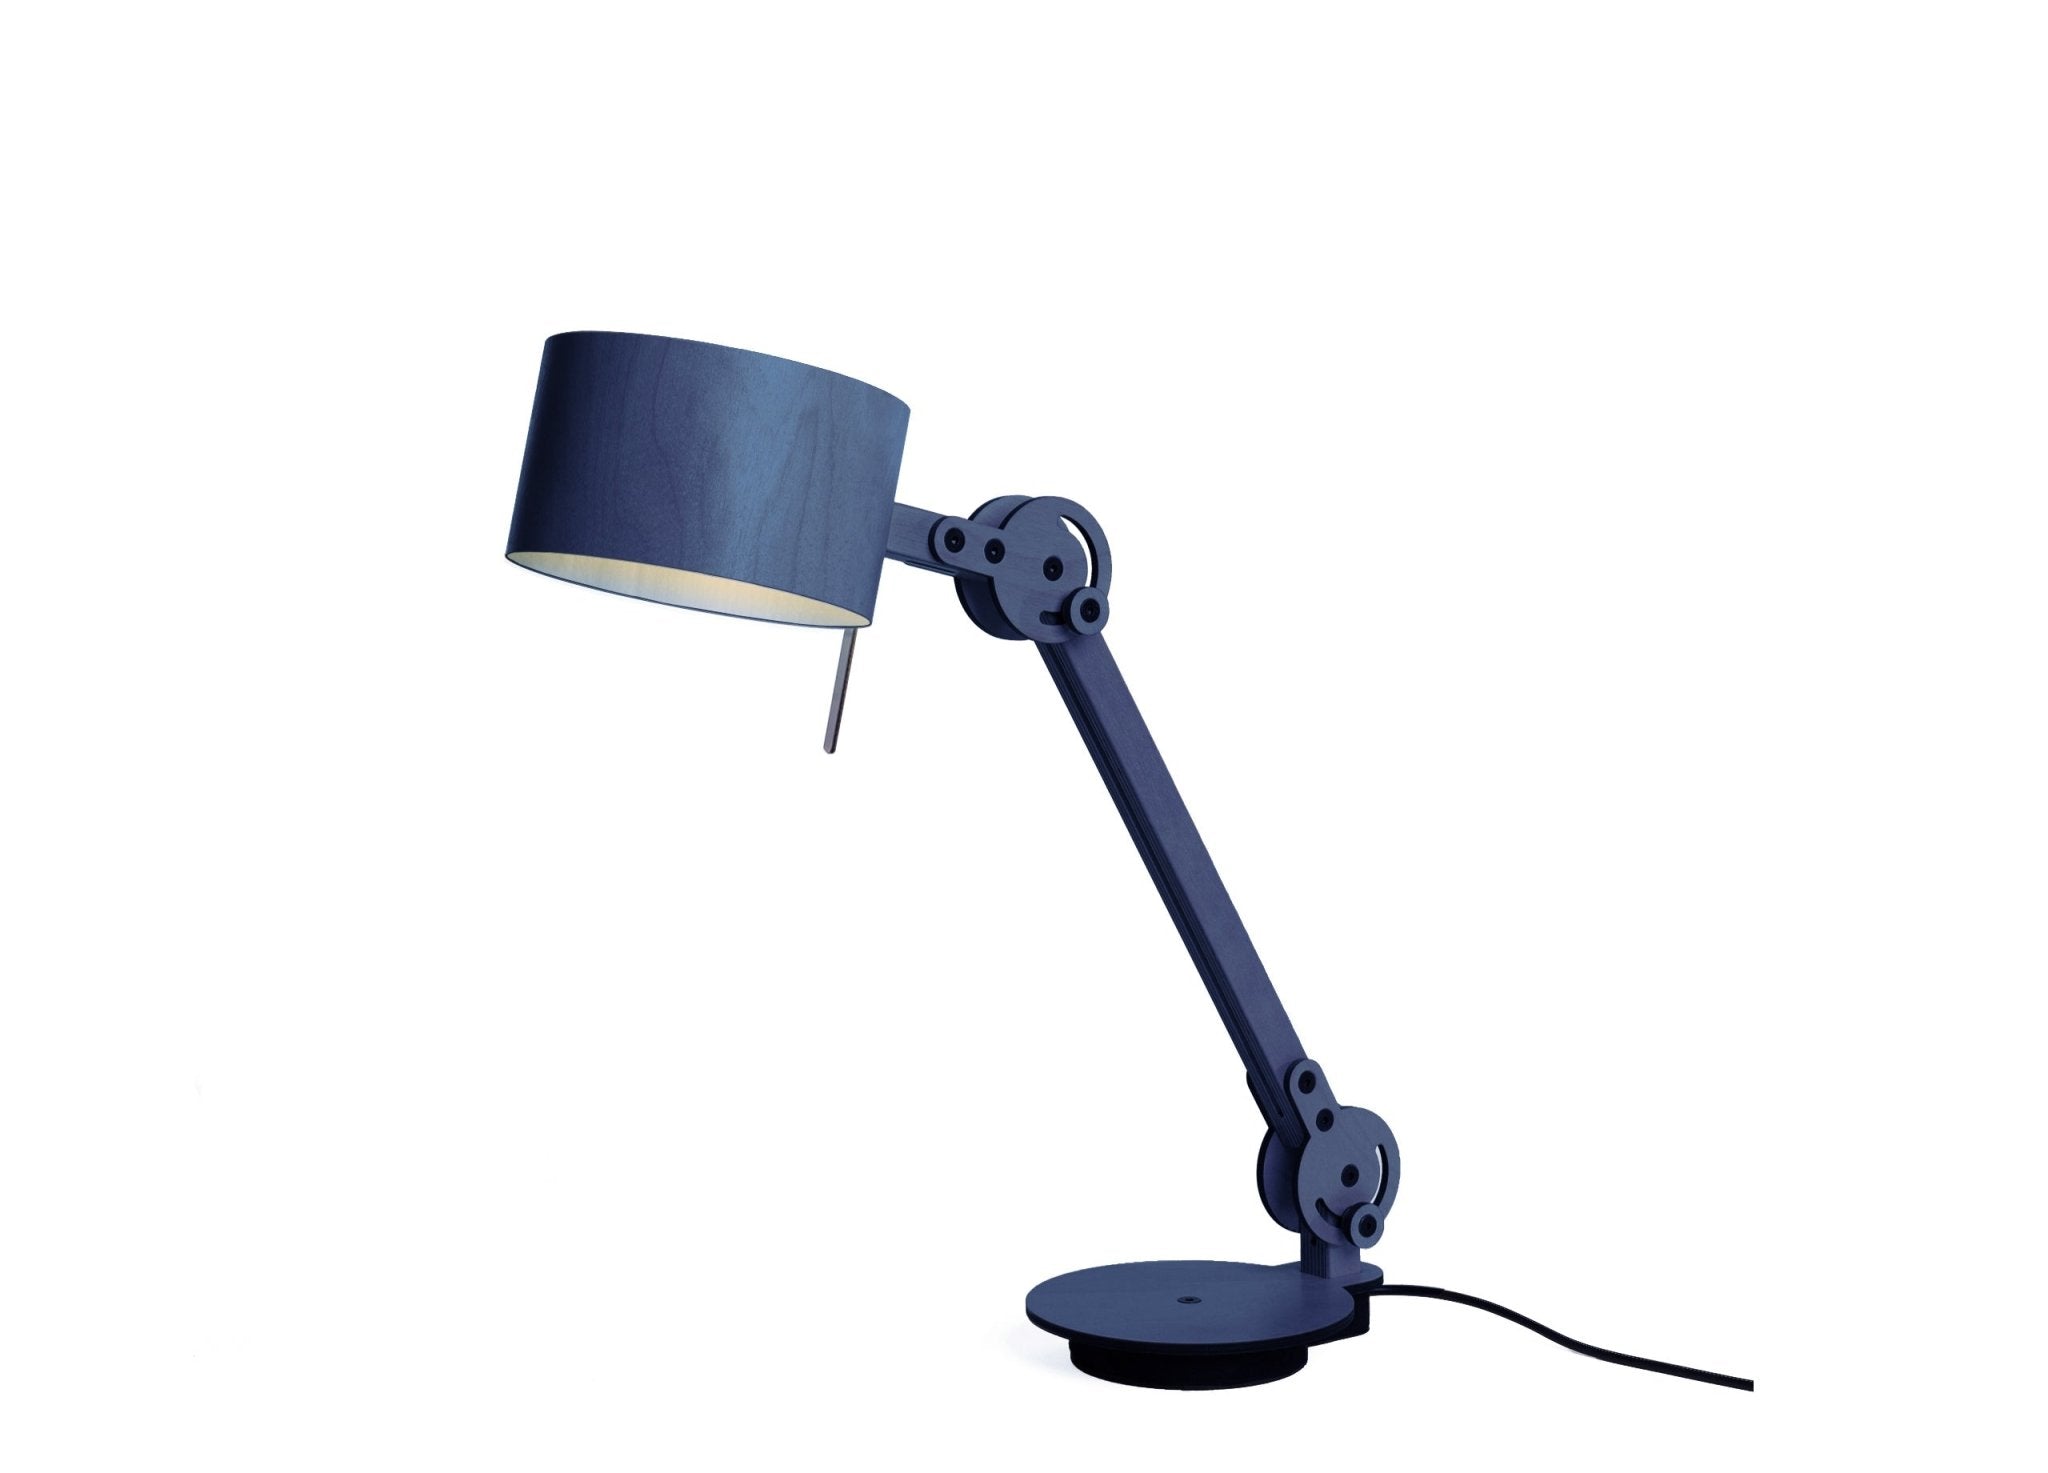 24mm Circle Arc Table Lamp - gimmiiArend Groosman